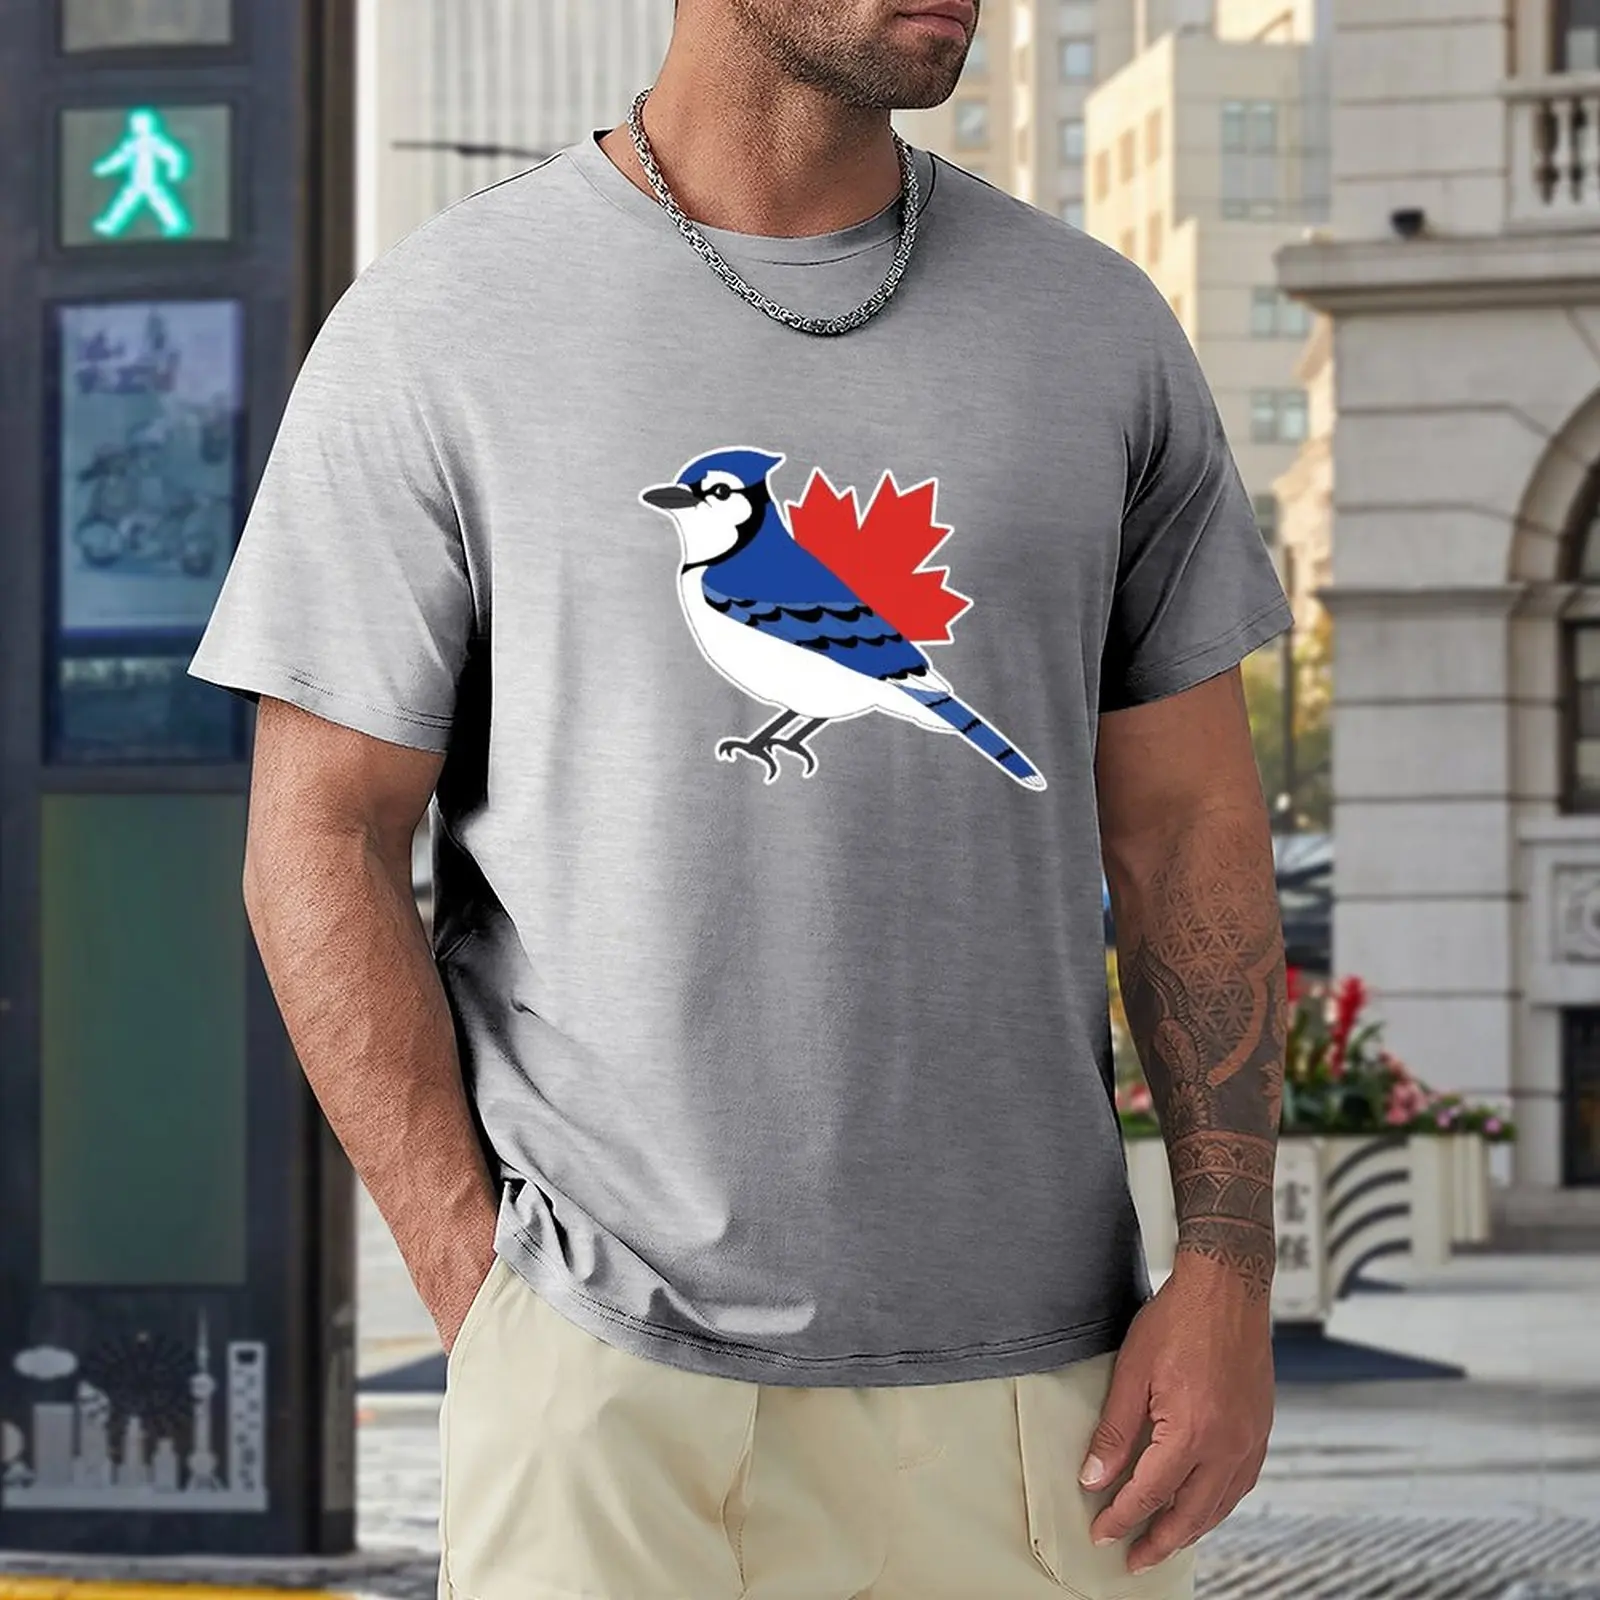 Blue Jay T-Shirts man Aesthetic clothing mens plain t shirts